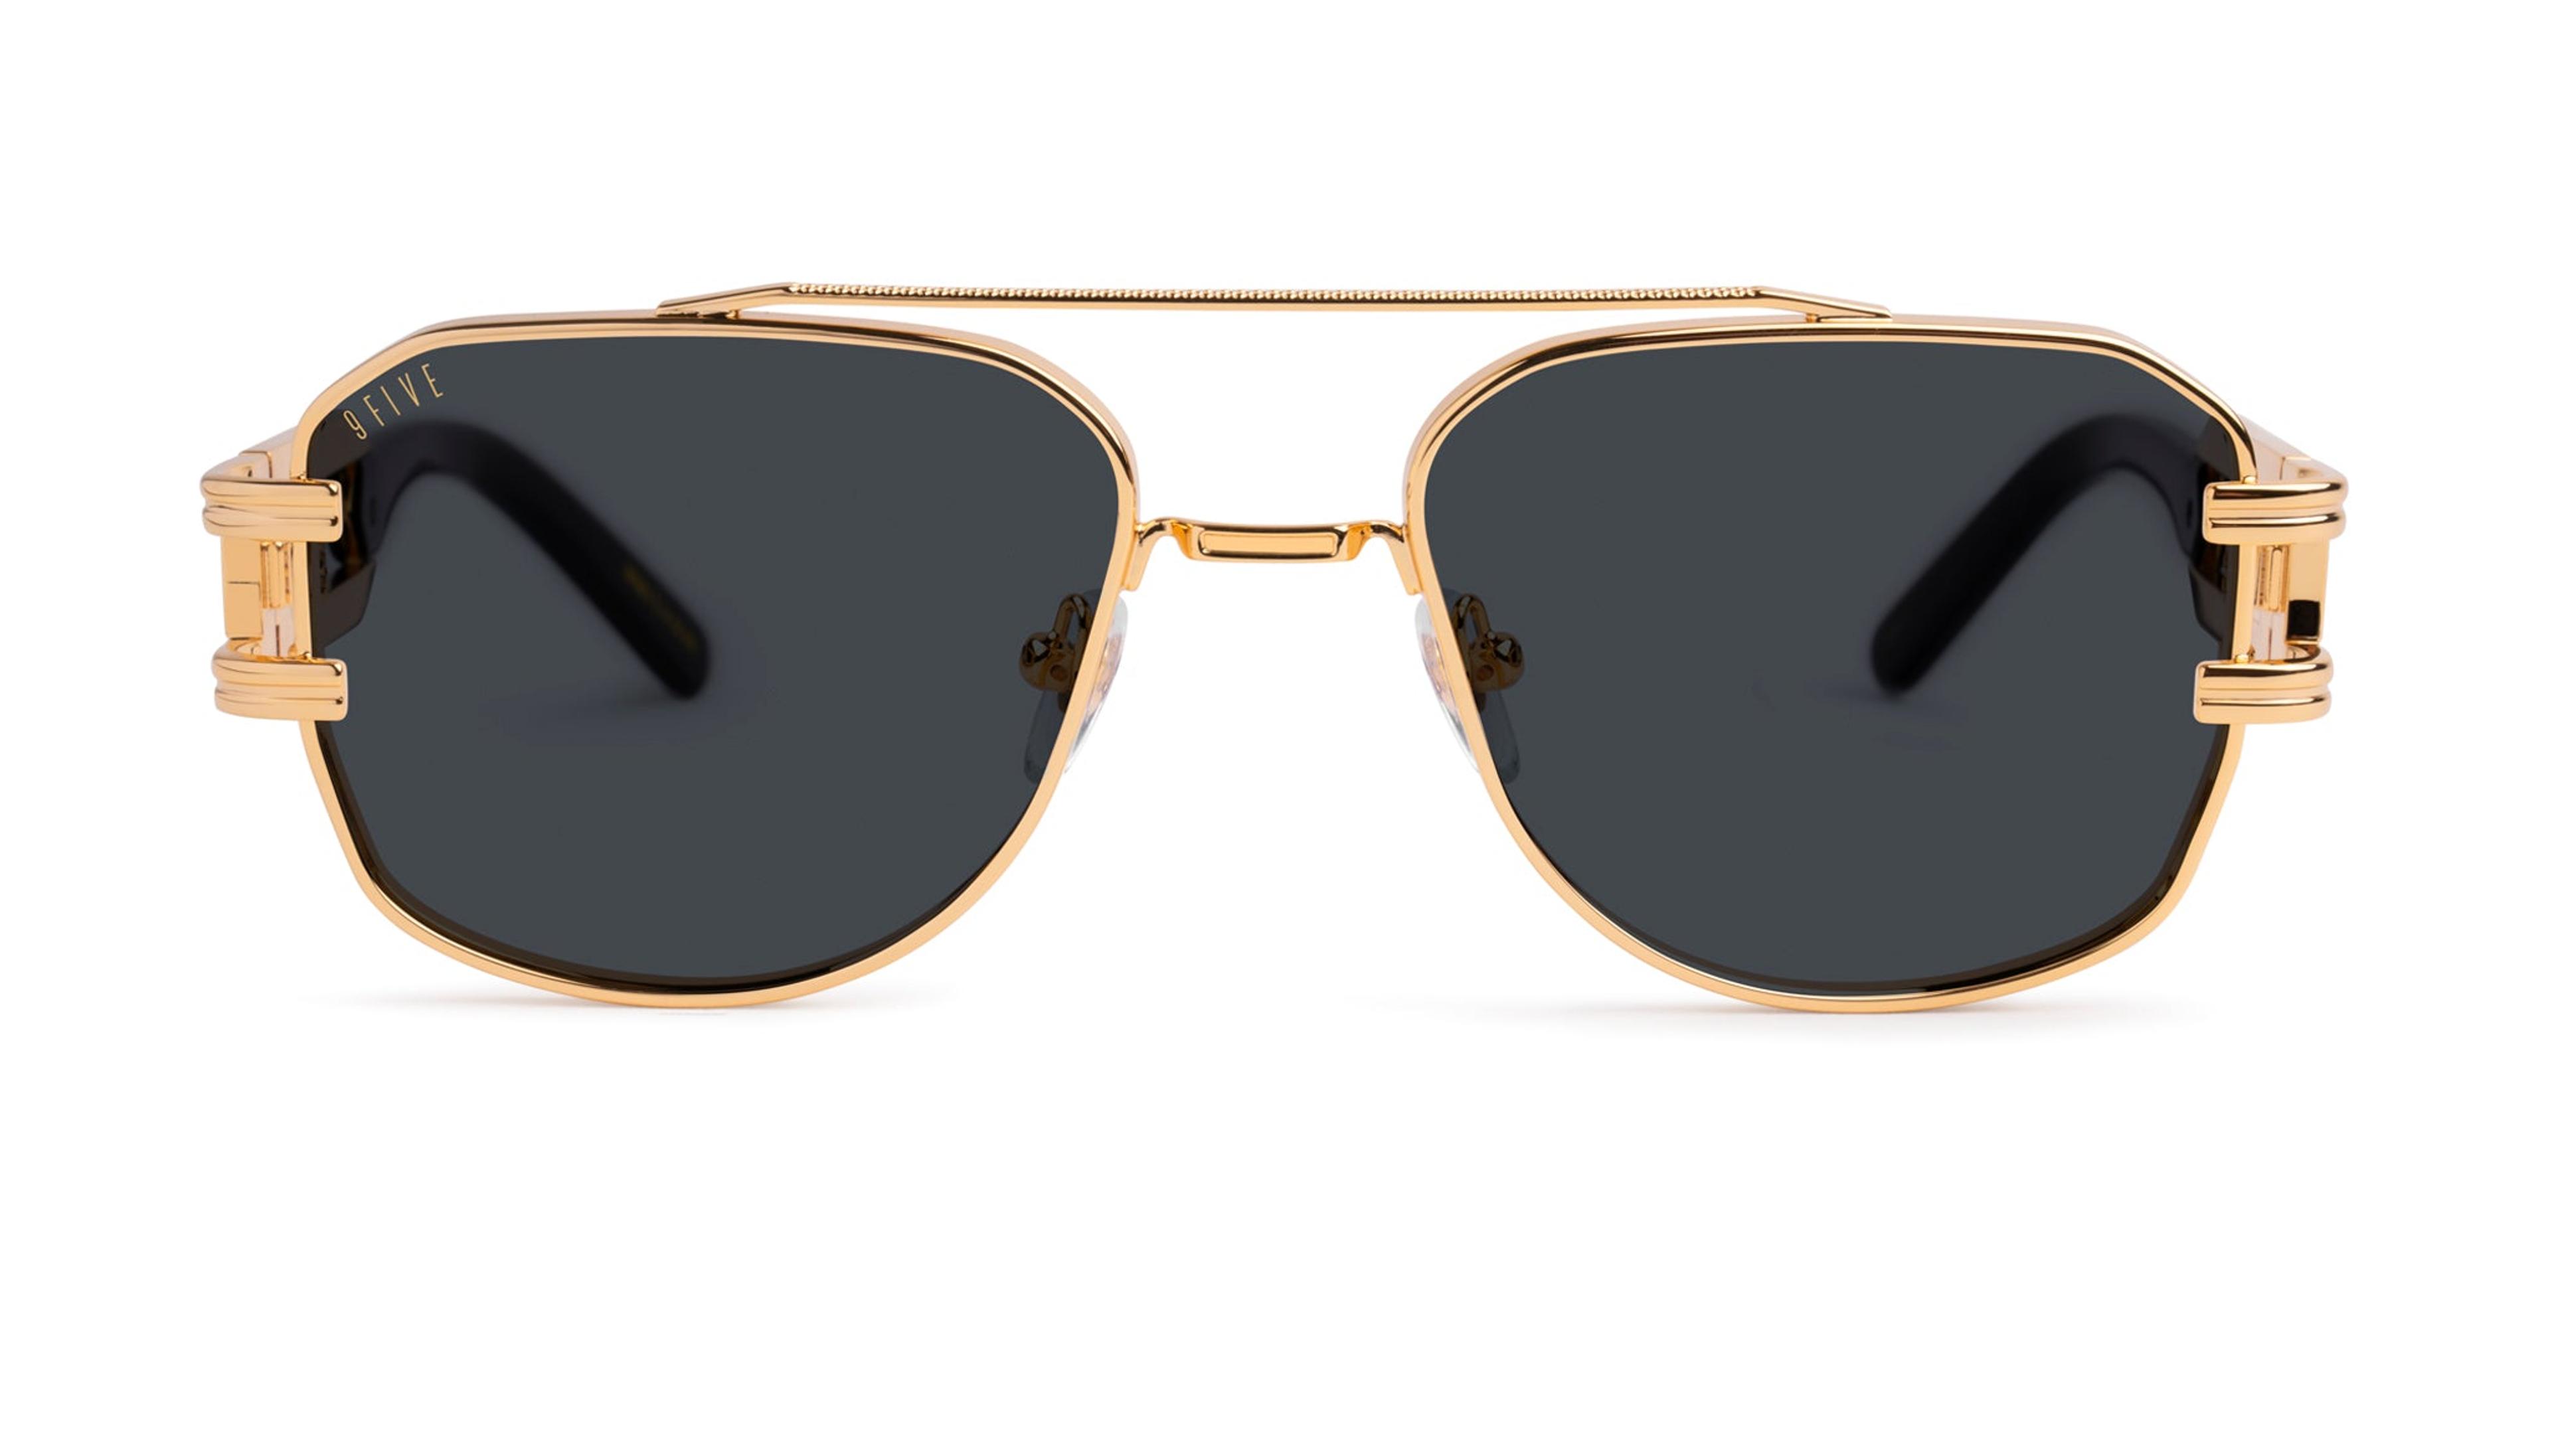 Alternate View 1 of 9FIVE Royals Black & 24K Gold Sunglasses Rx